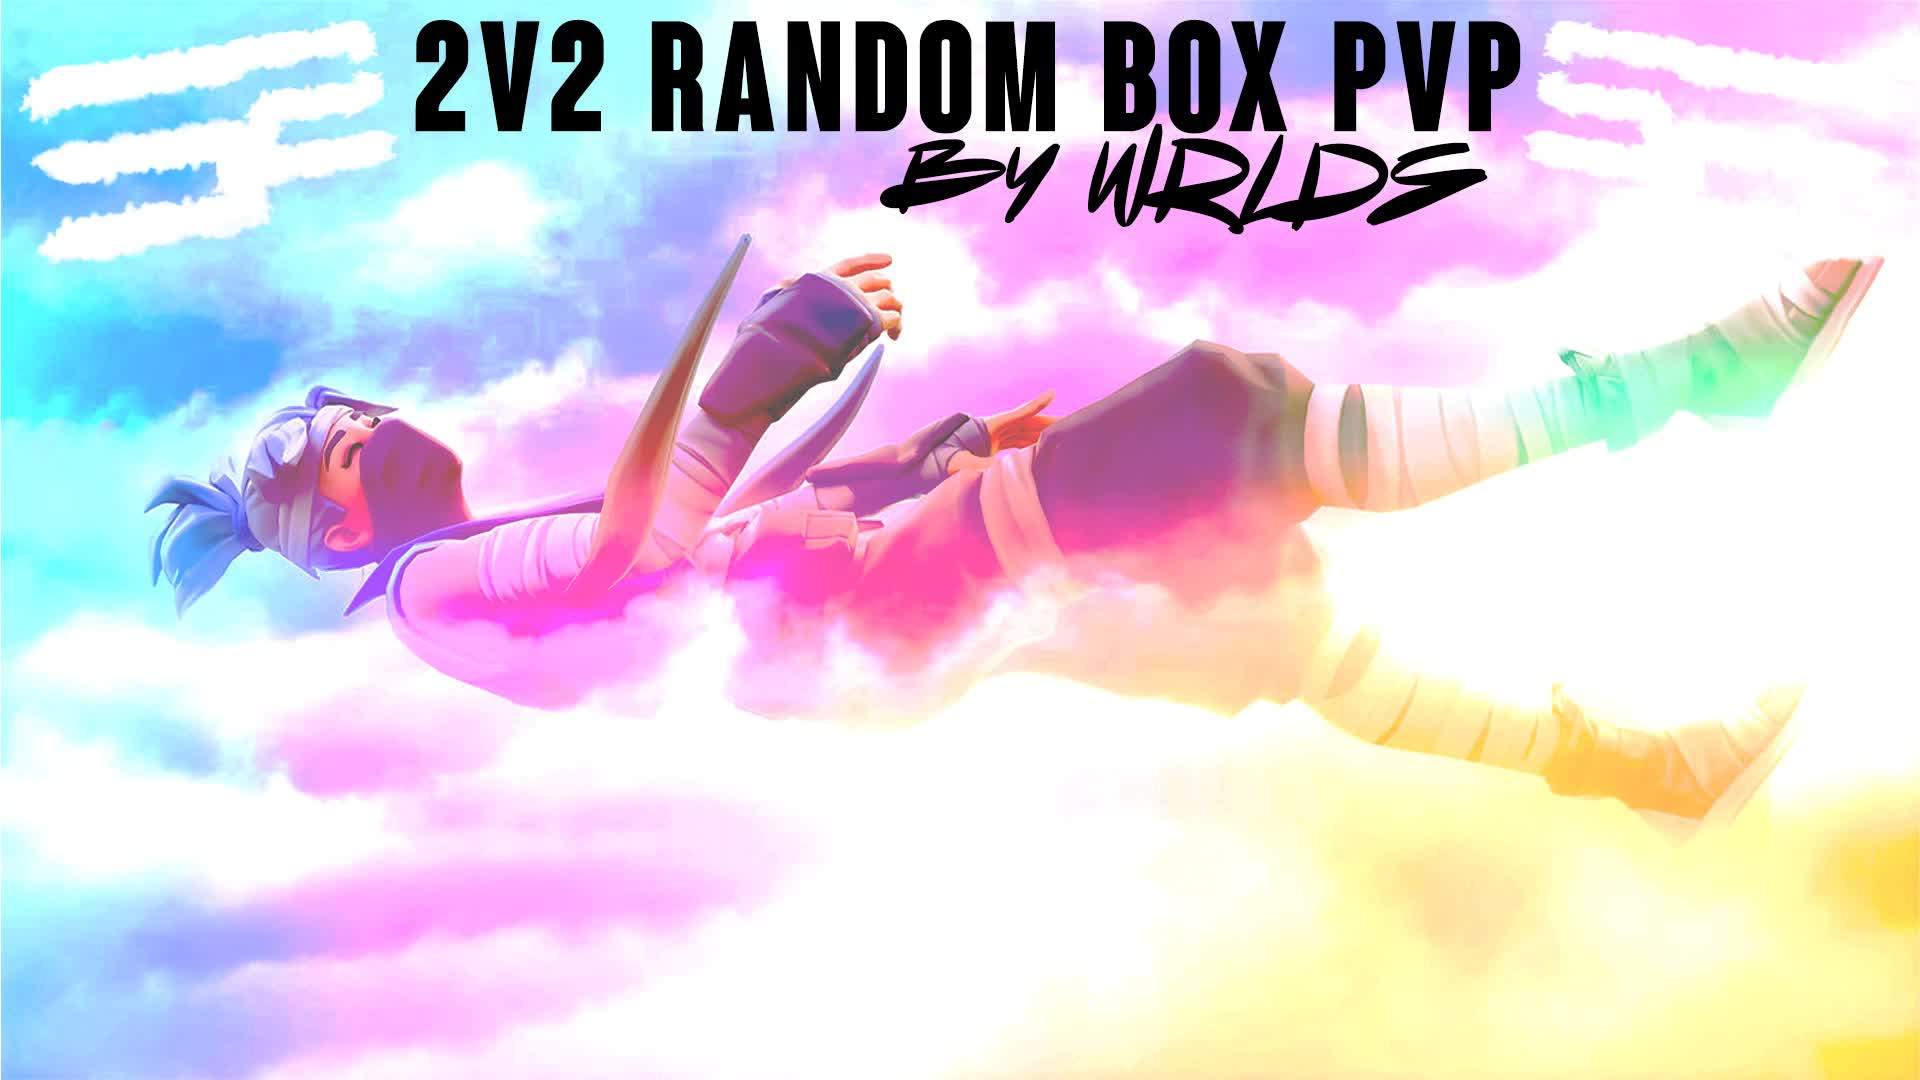 2V2 RANDOM BOX PVP